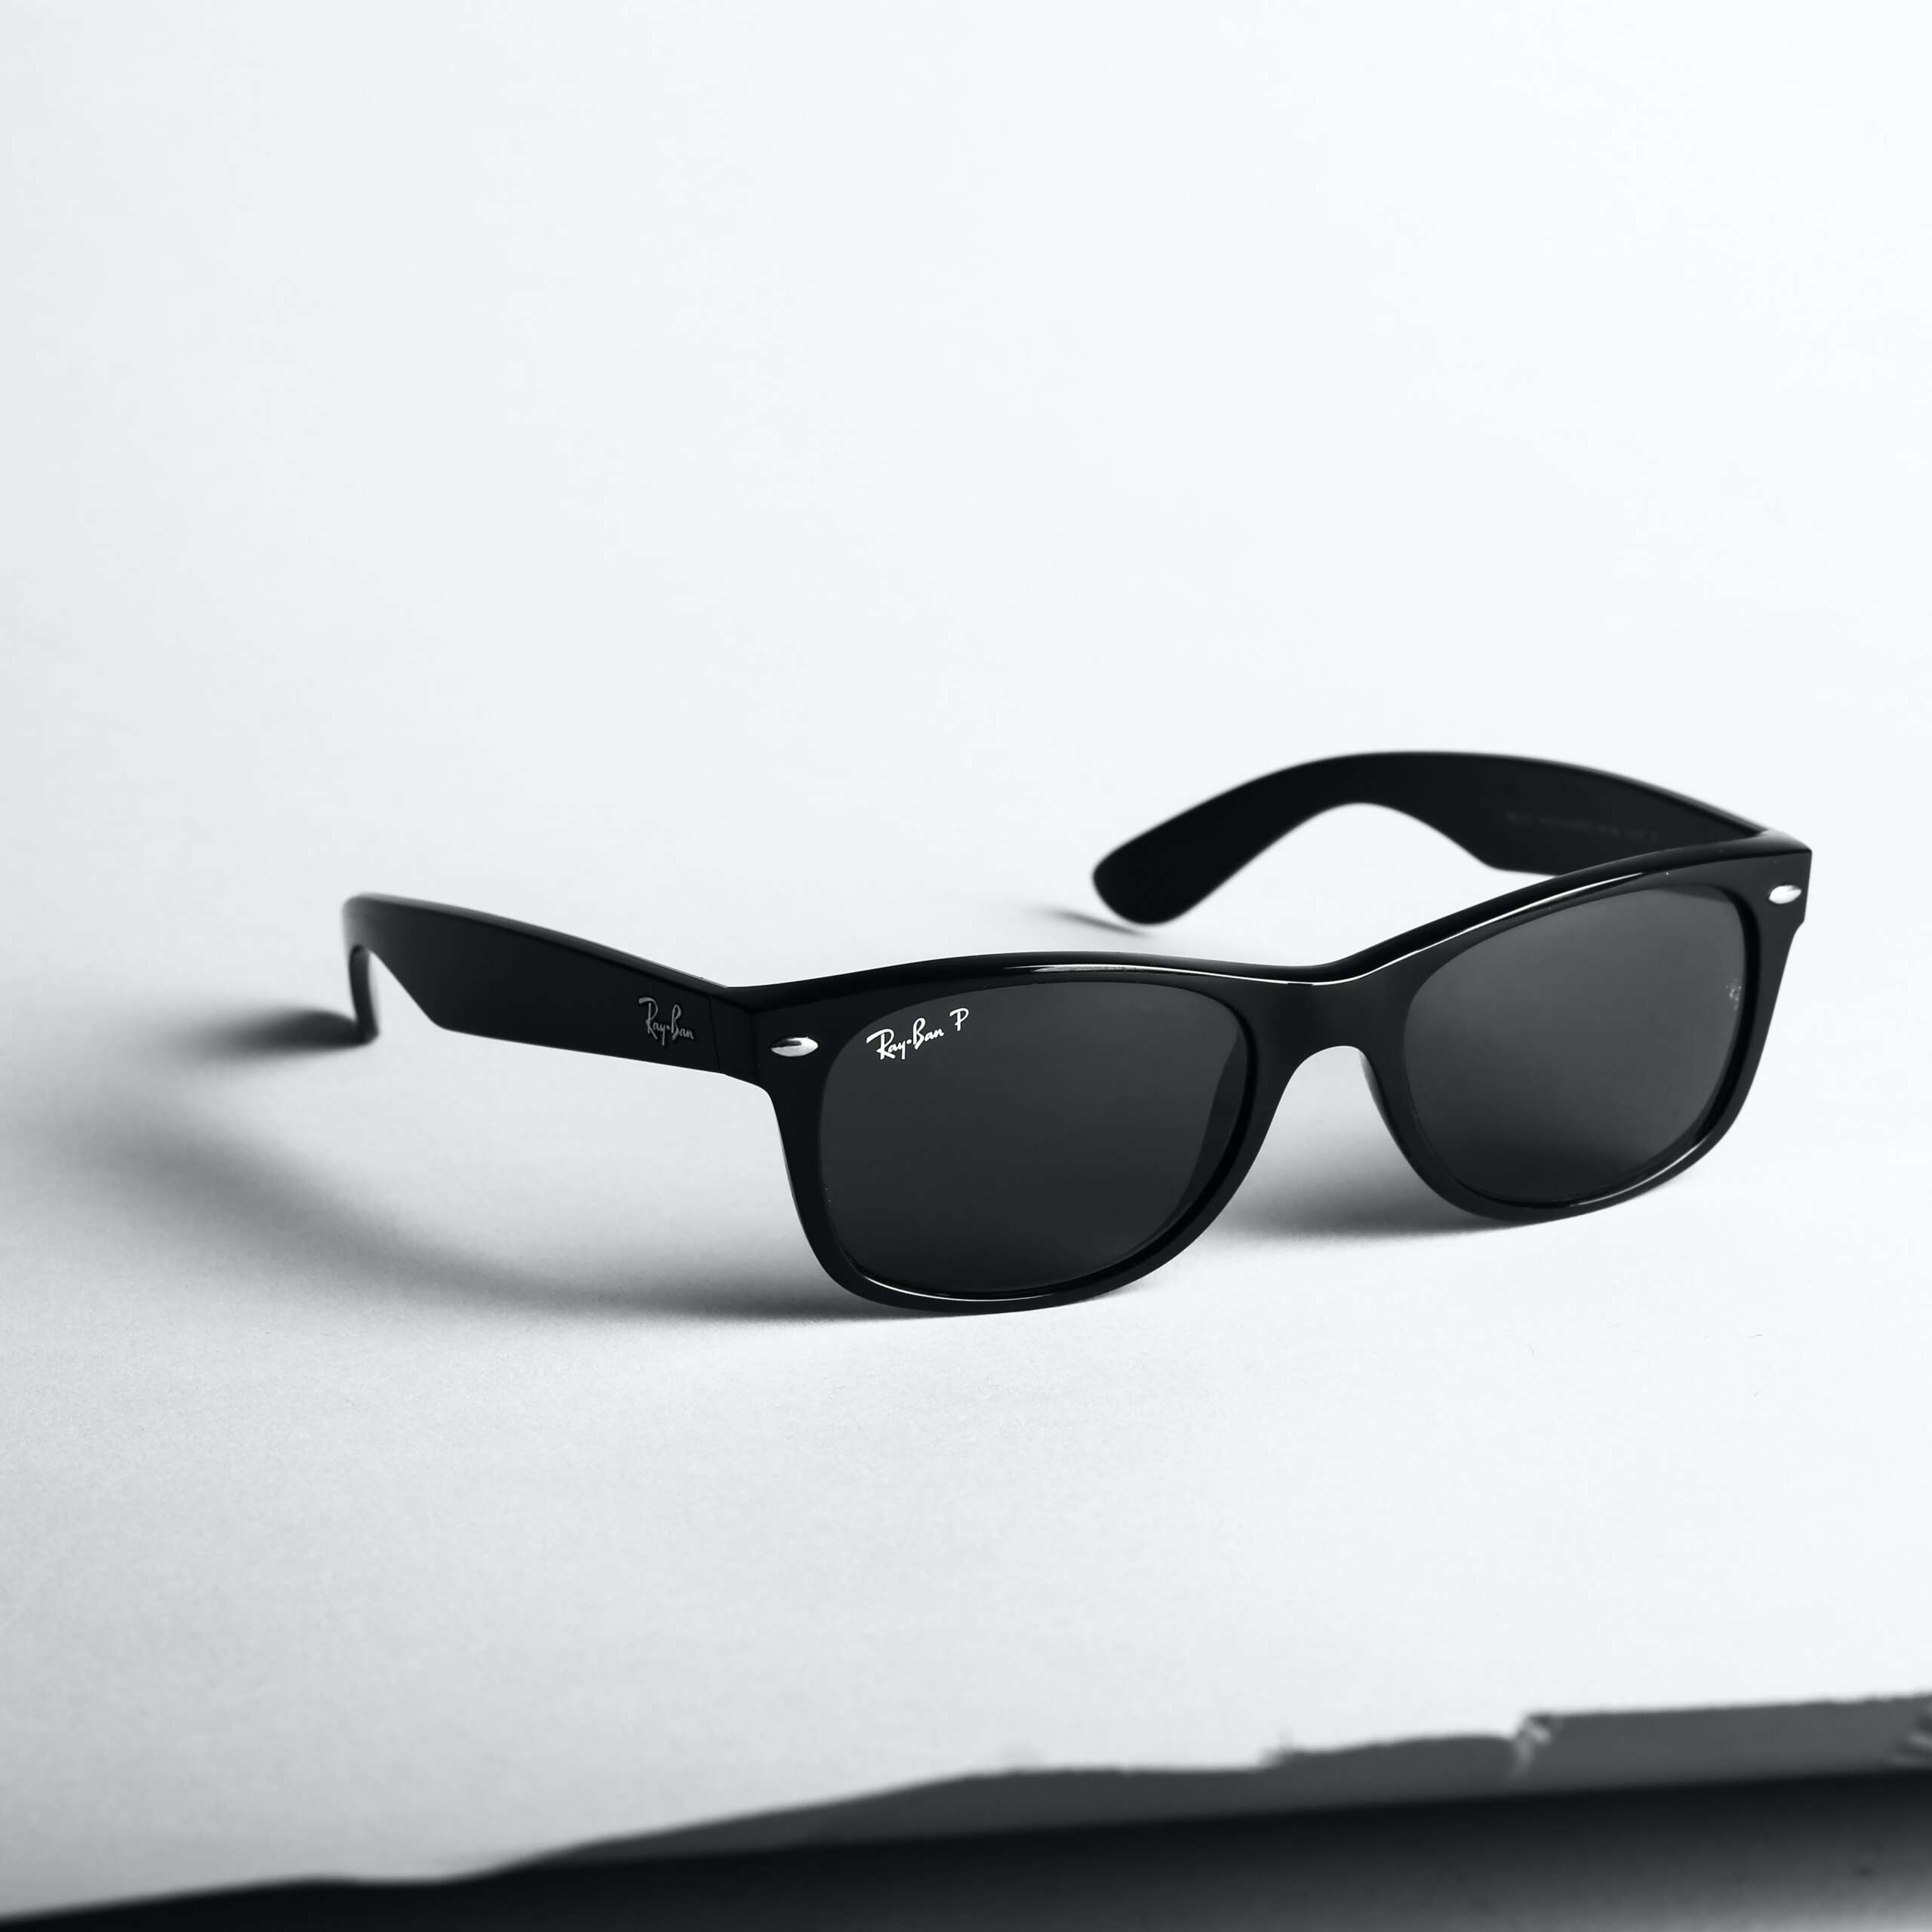 sunglasses - employee gift idea